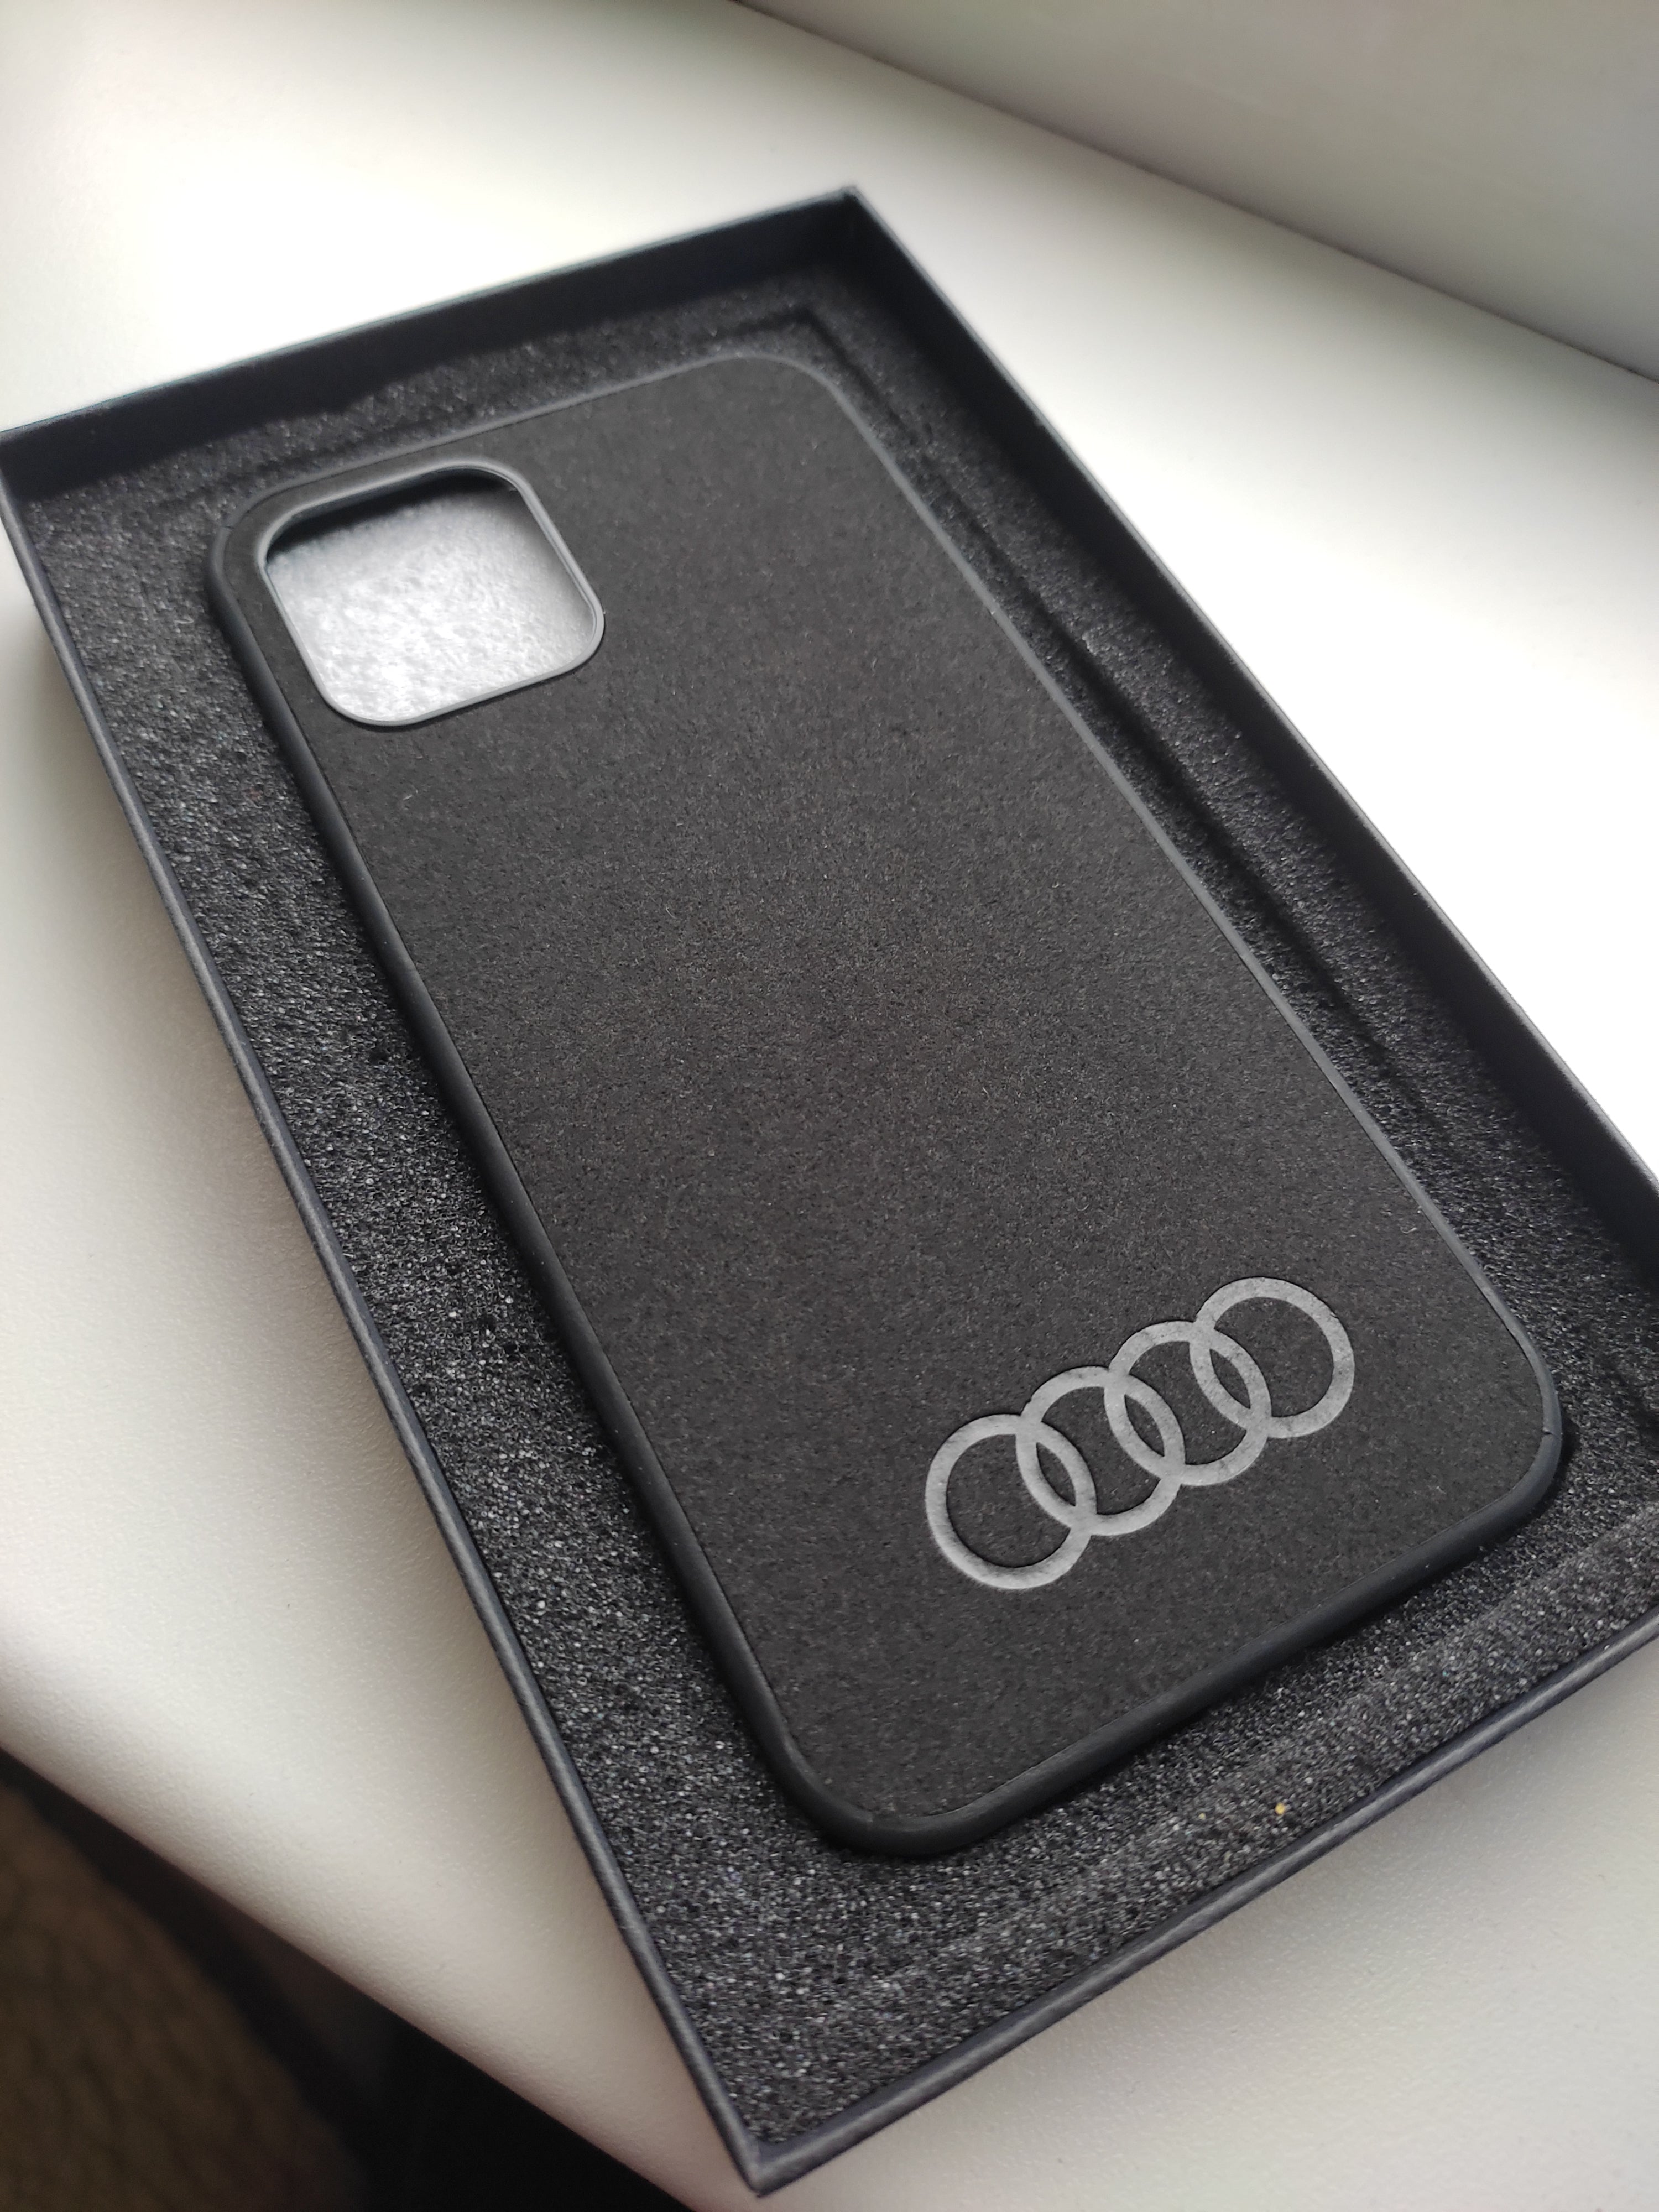 Car Fans Zone Audi Alcantara phone case in box